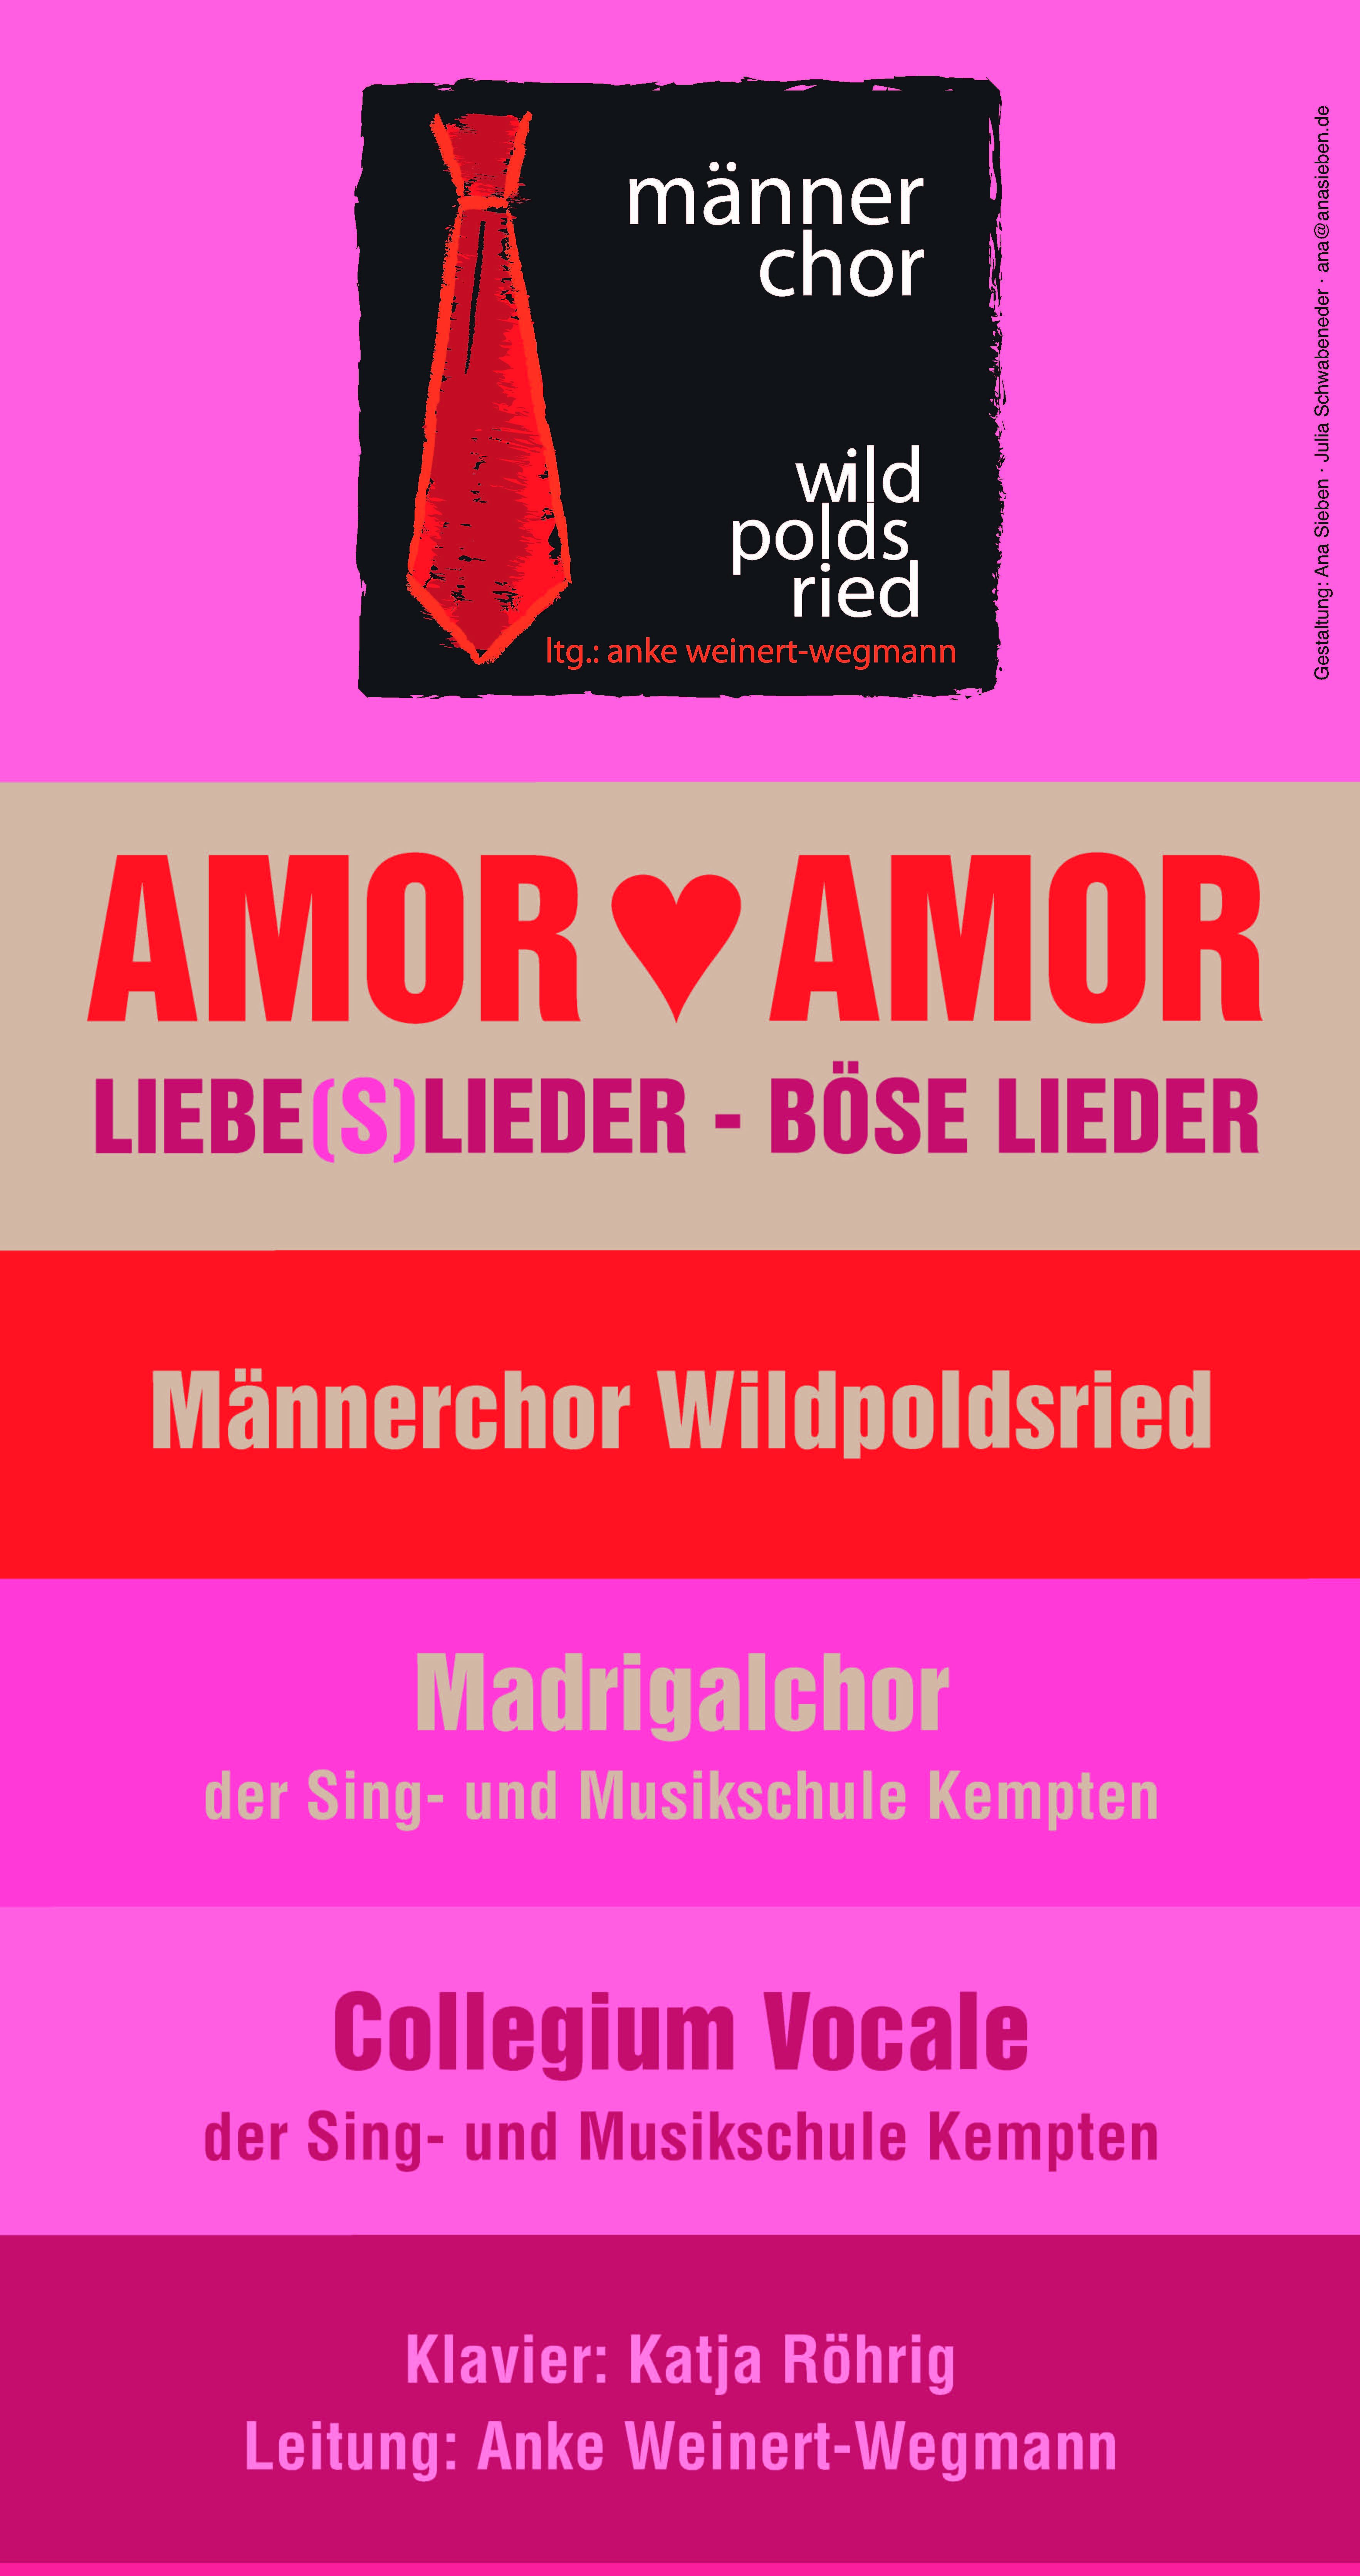 You are currently viewing Konzert Männerchor   Amor Amor LIEBE(S)LIEDER – BÖSE LIEDER